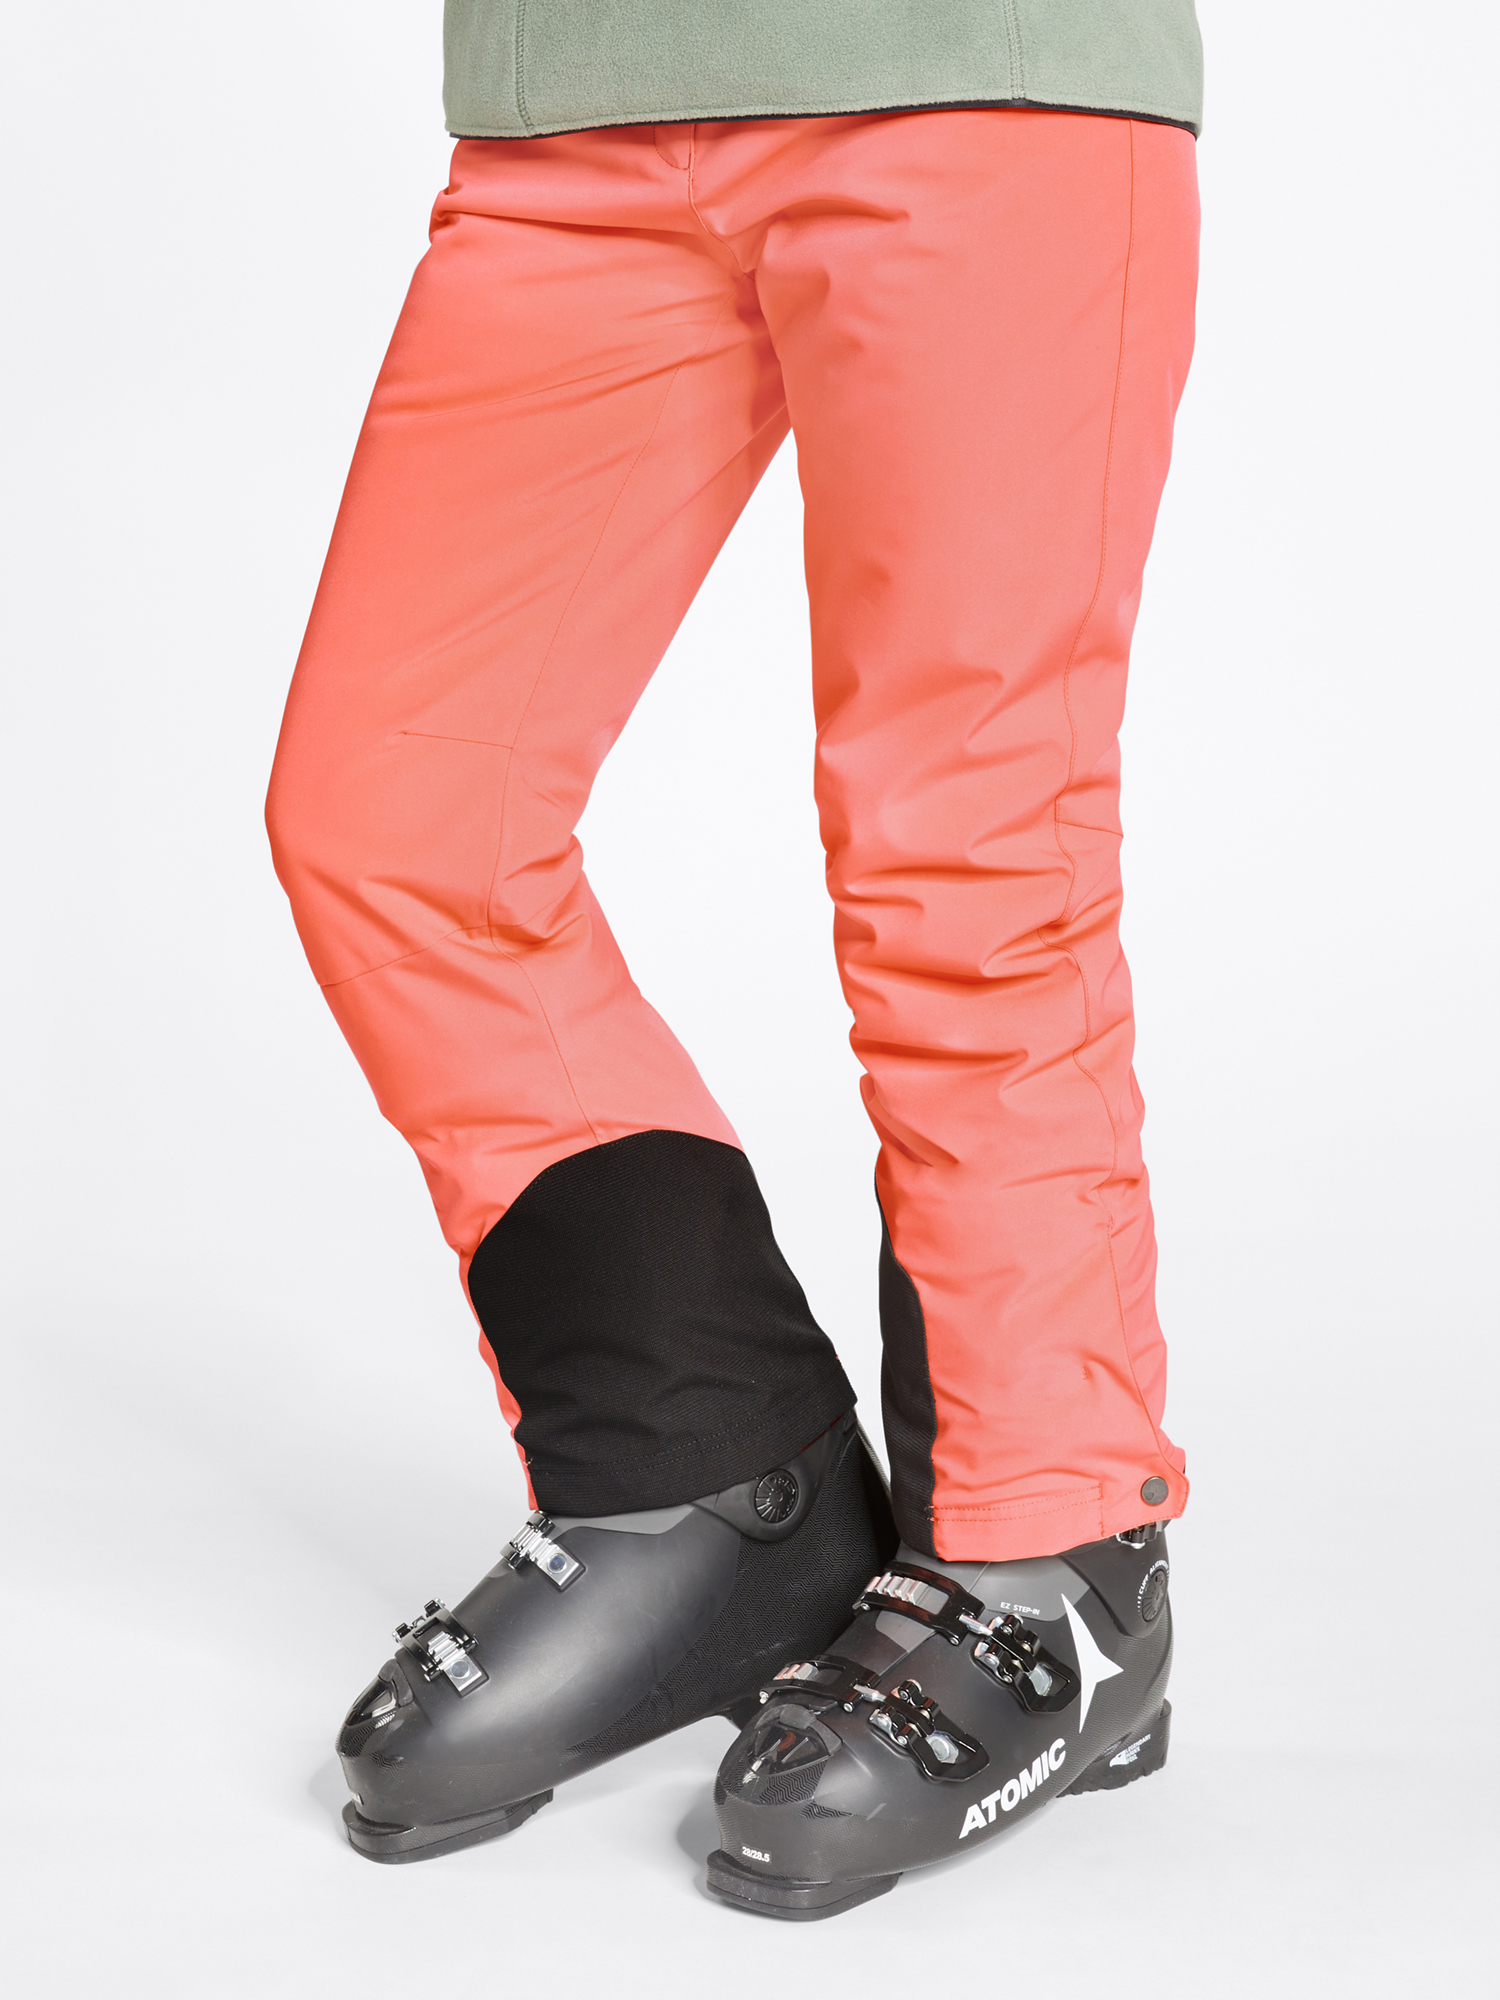 ZIENER TILLA lady (pants ski) vibrant peach online kaufen